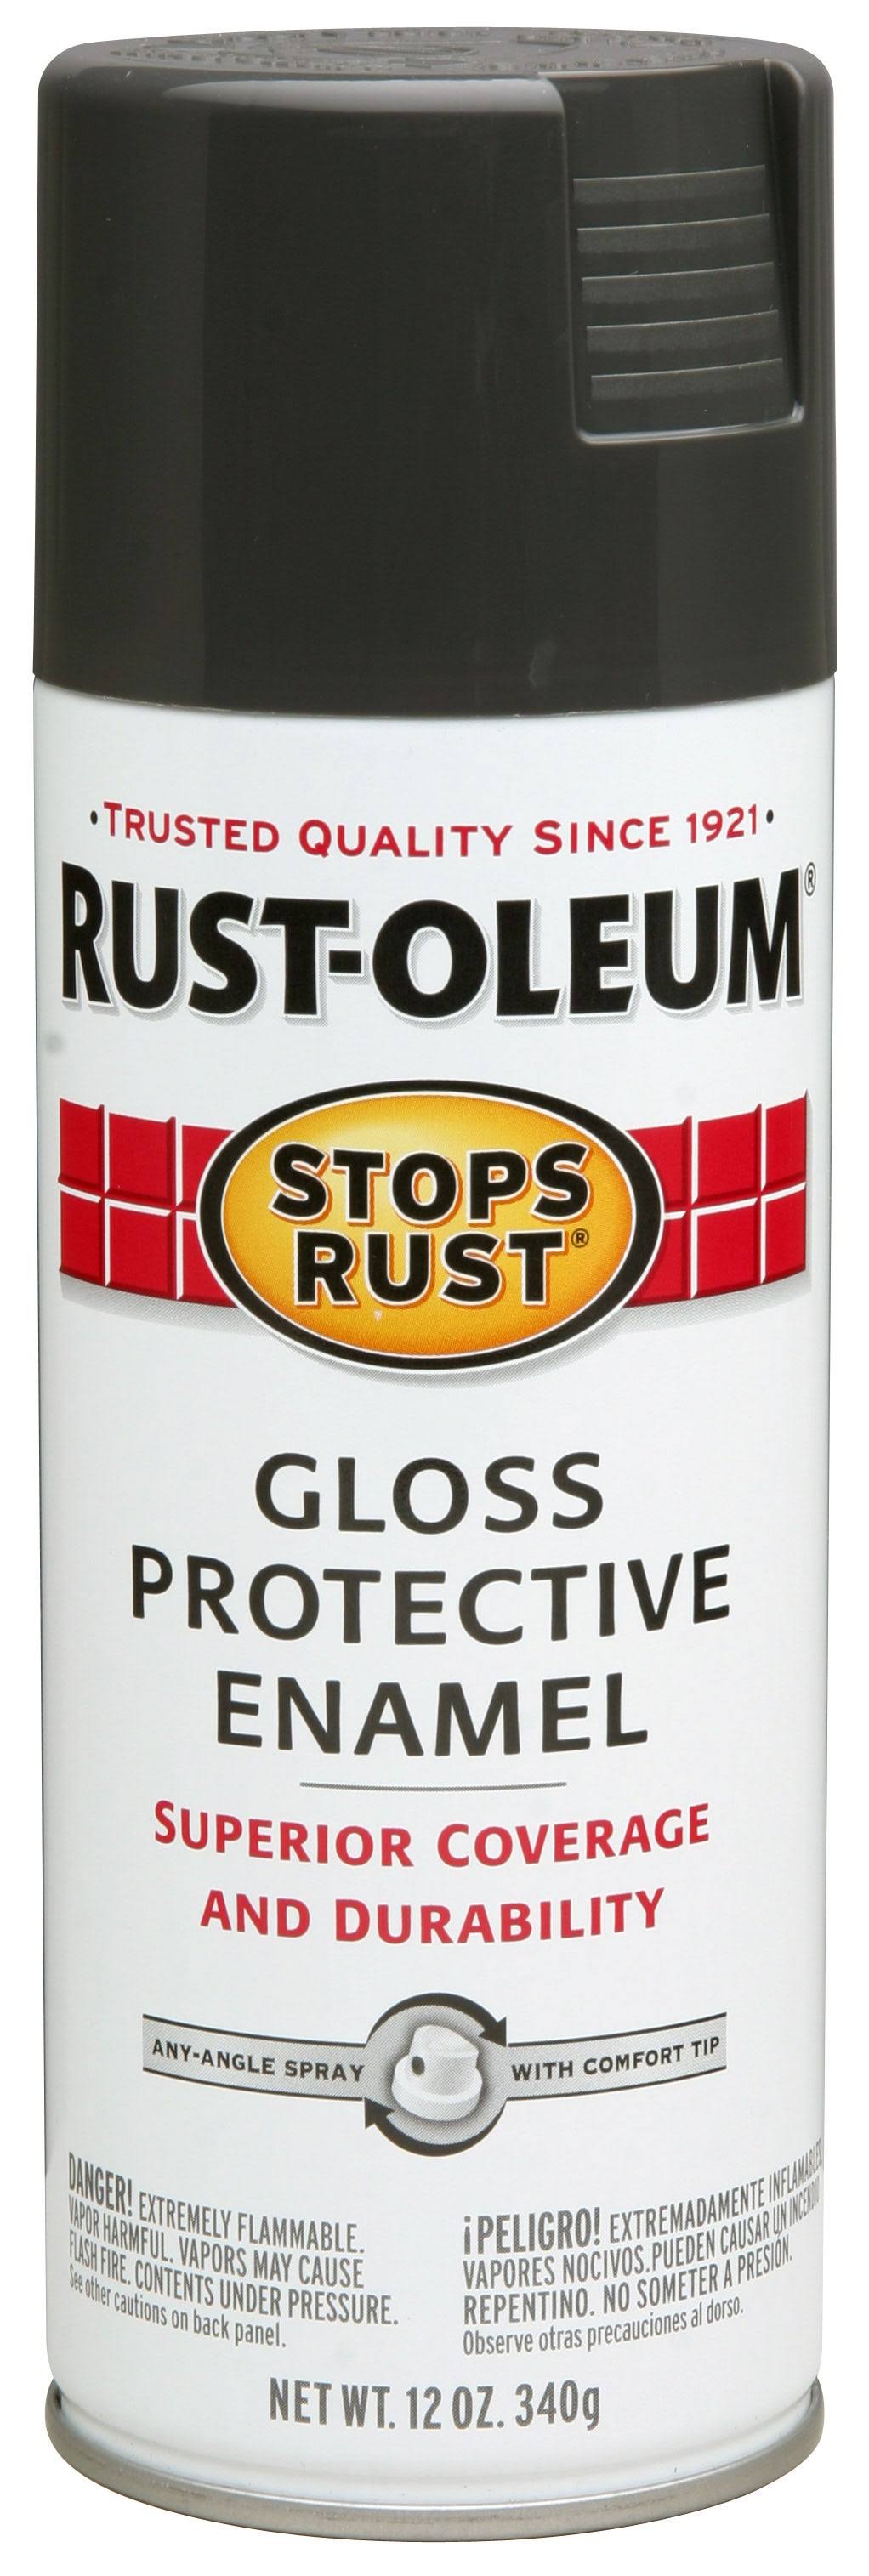 Rust-Oleum Stops Rust Gloss Protective Enamel - Smoke Gray, 12 oz